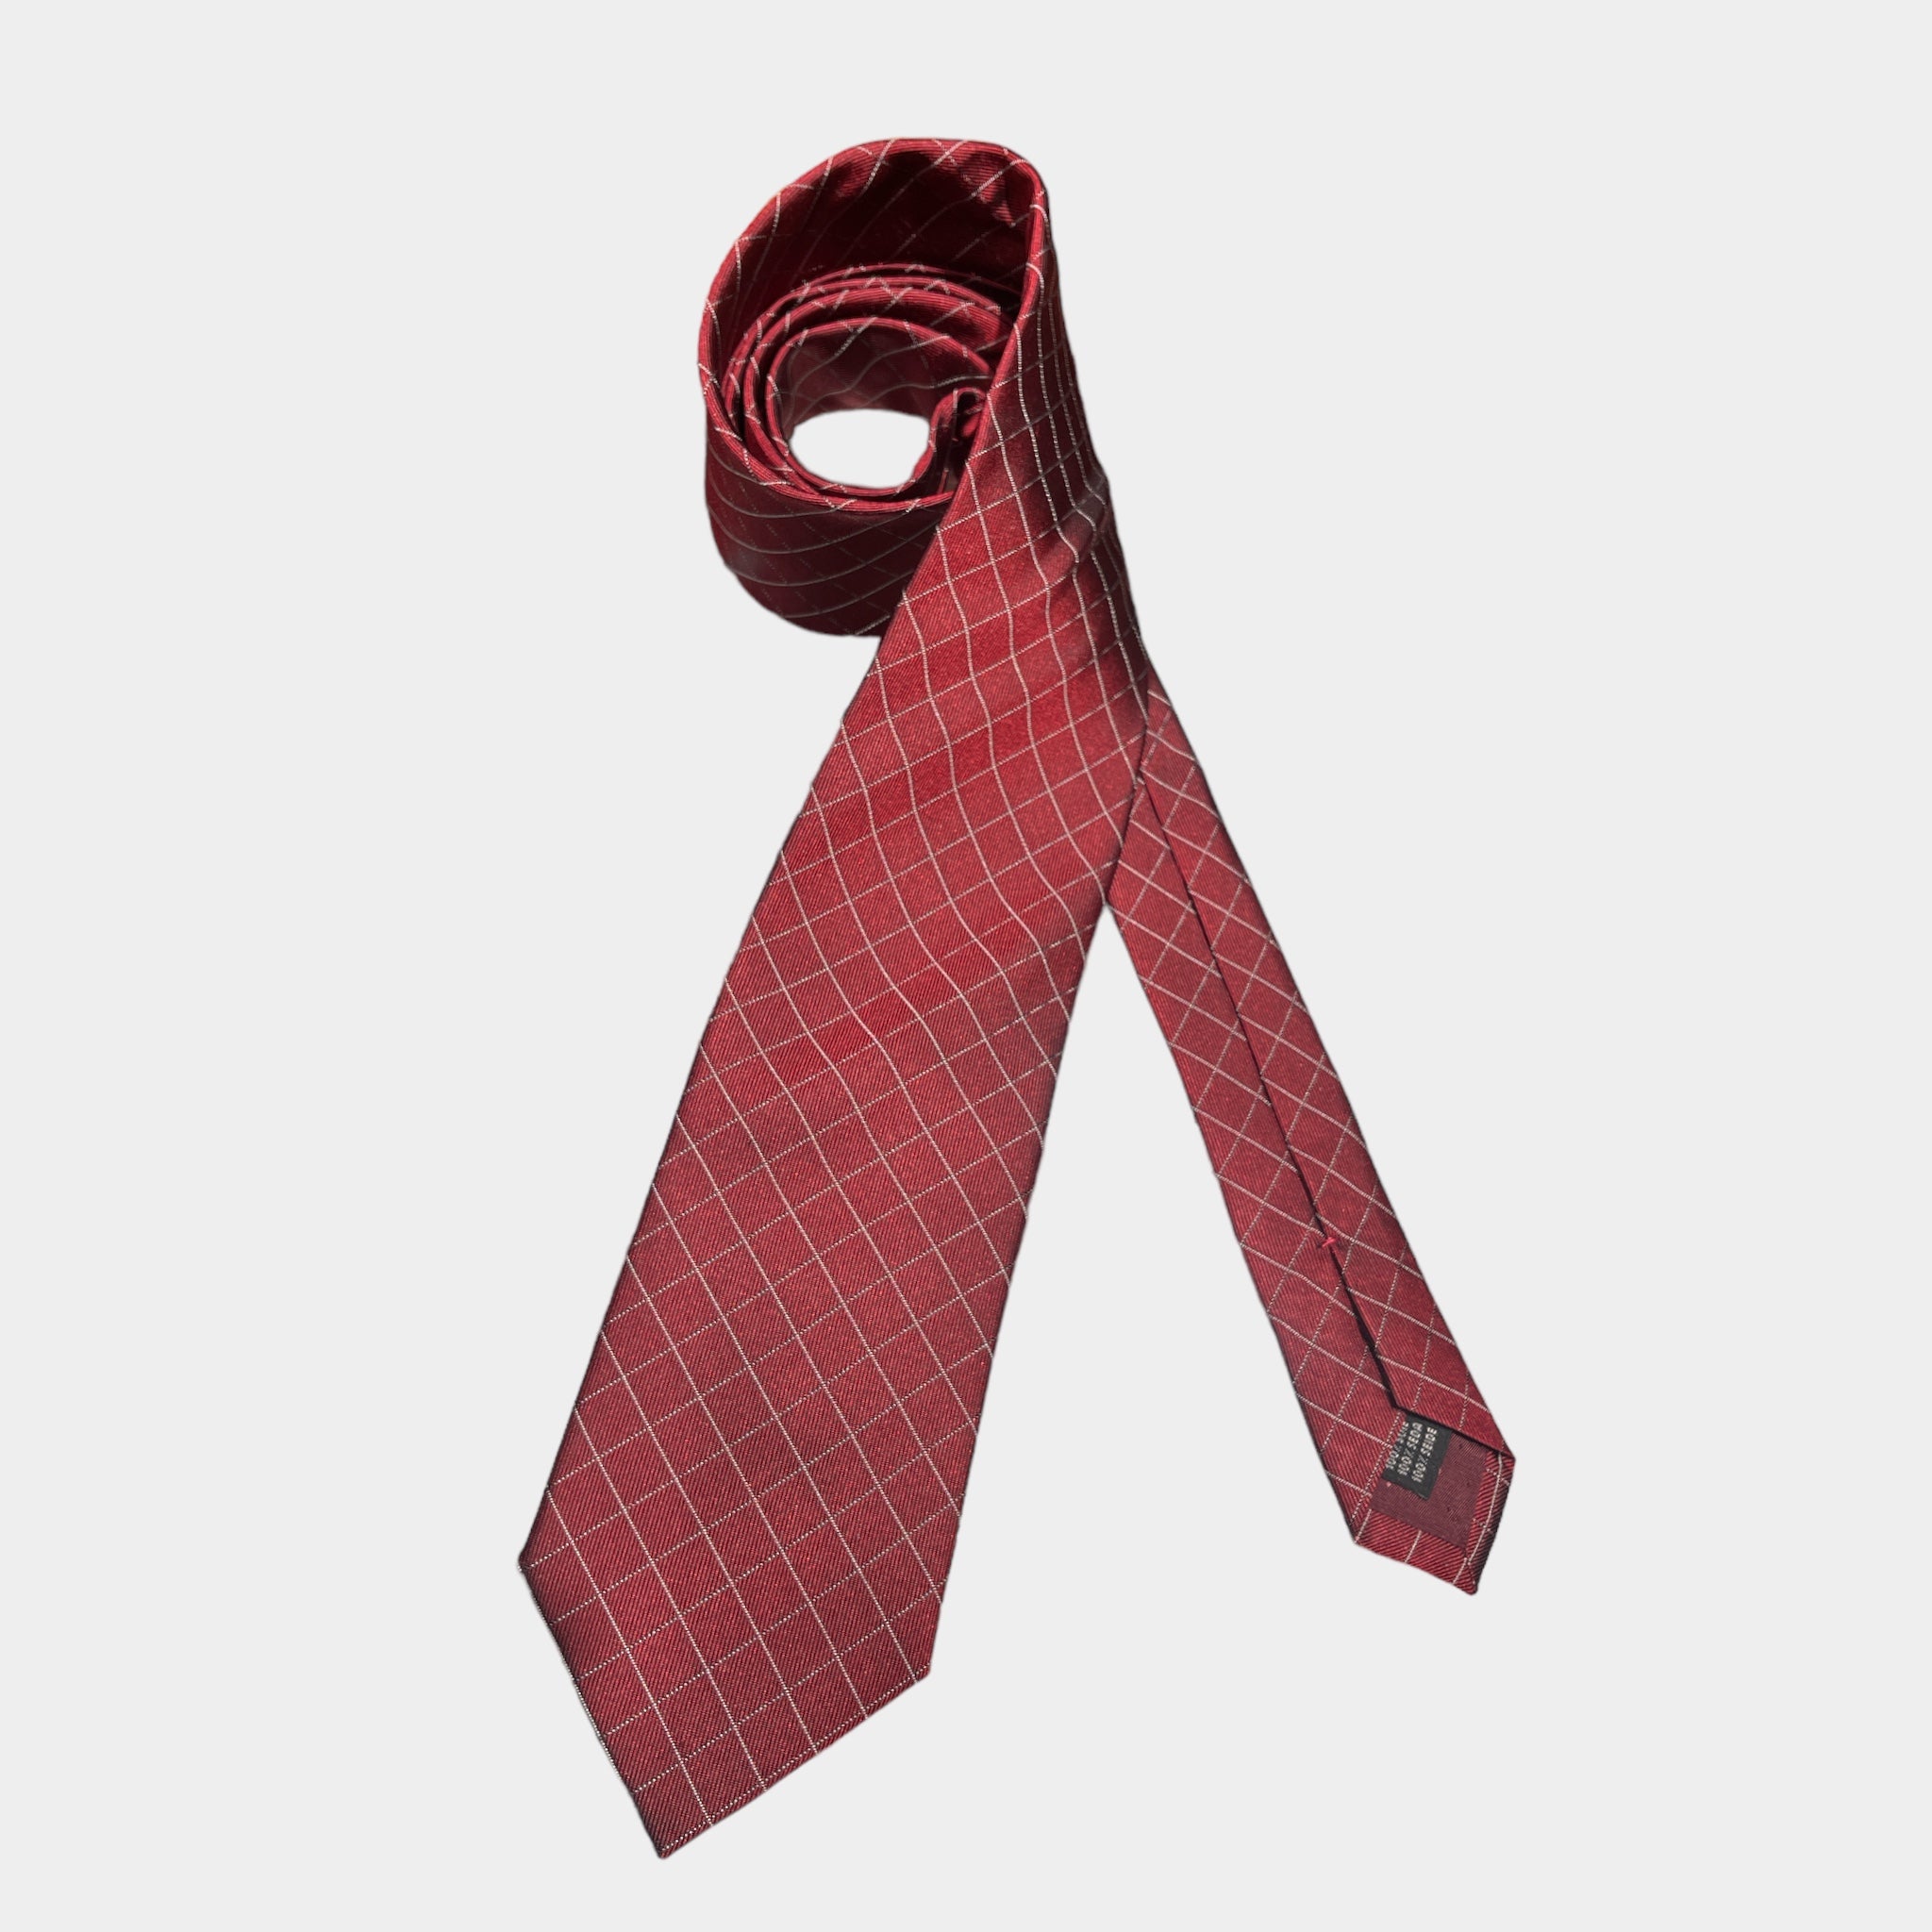 Cravatta cm 8 100% Seta Microdisegni Rosso Bordeaux/Bianco